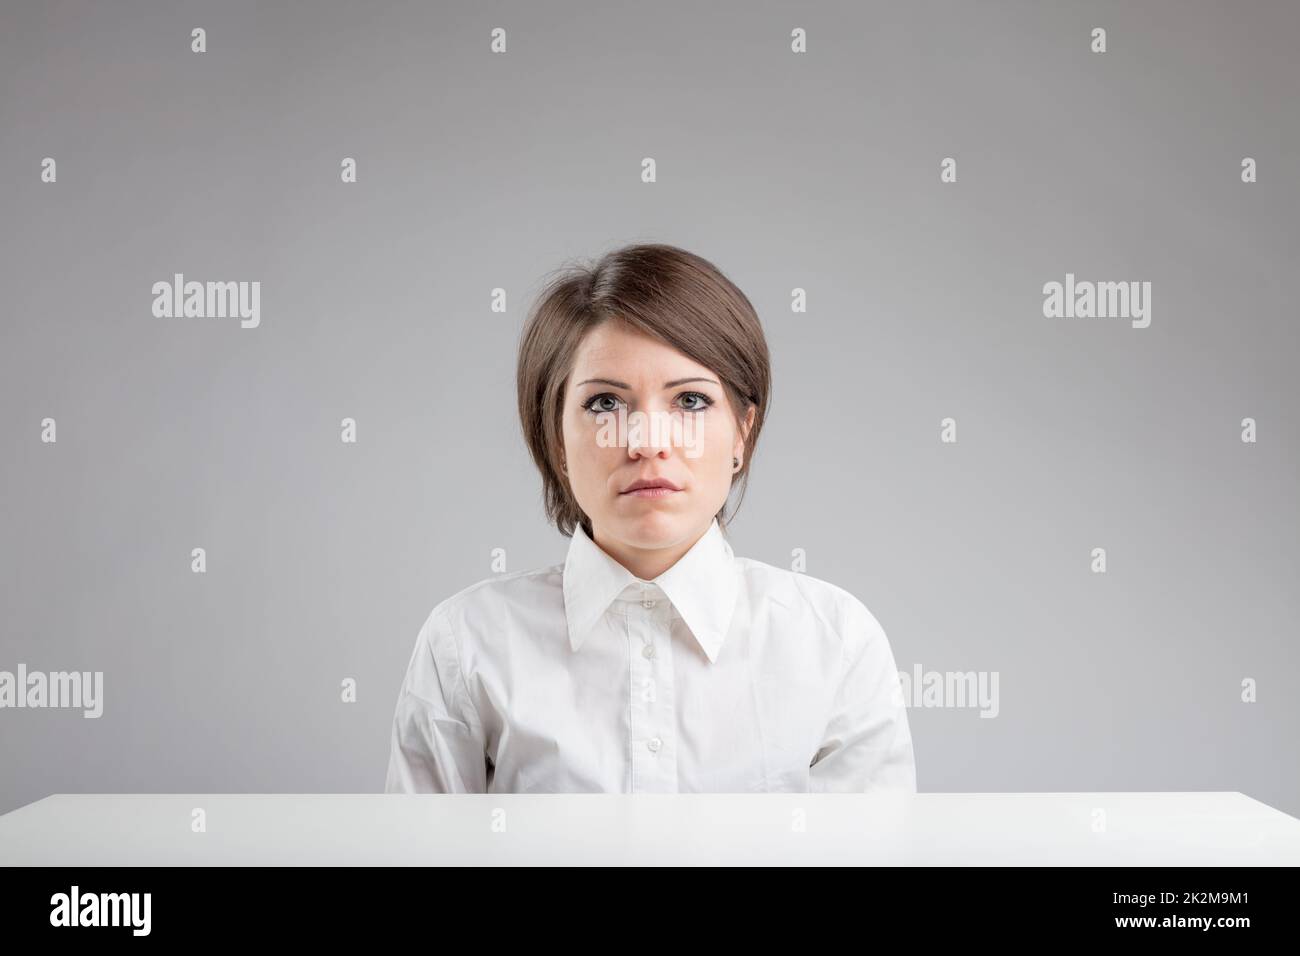 serious inexpressive woman portrait Stock Photo